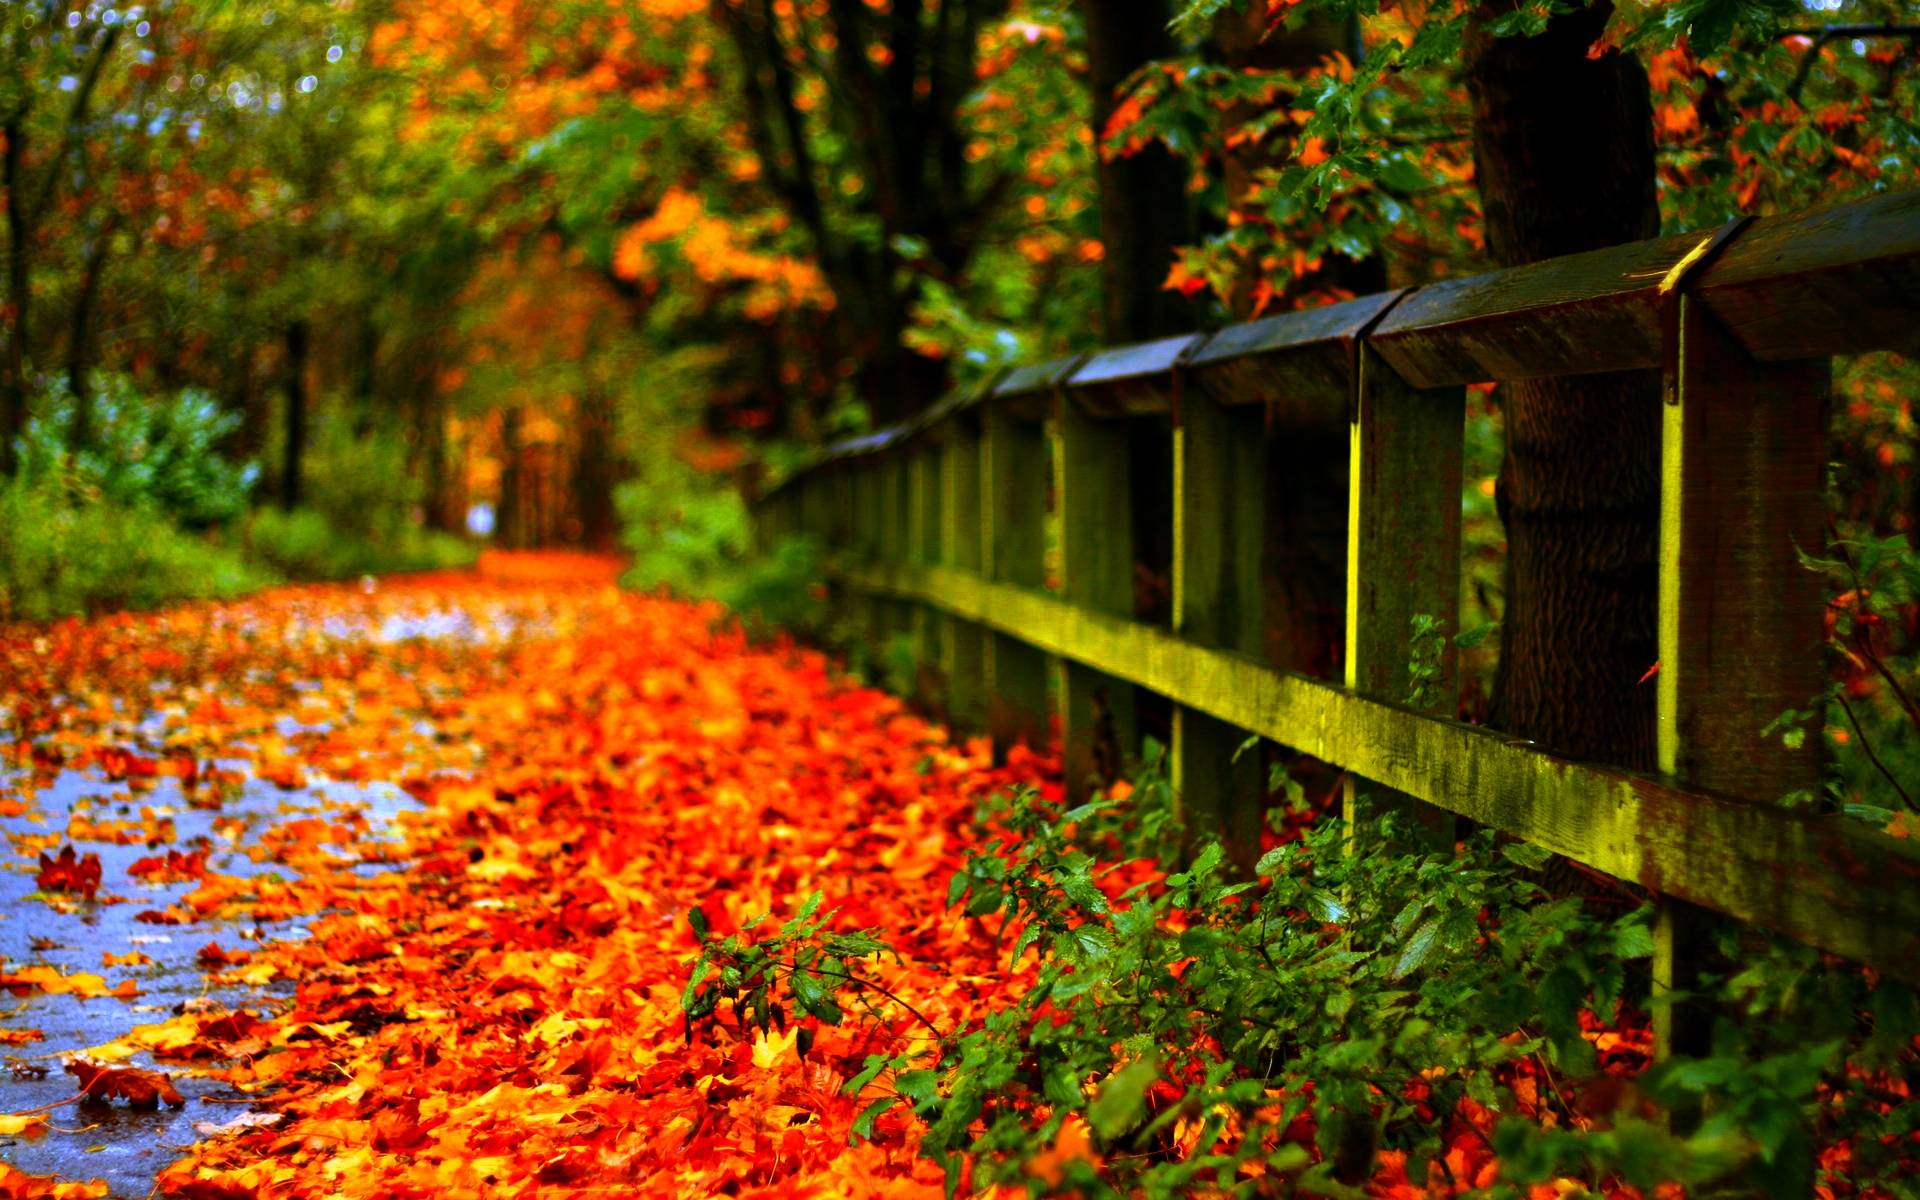 Autumn wallpaper HD for desktop background